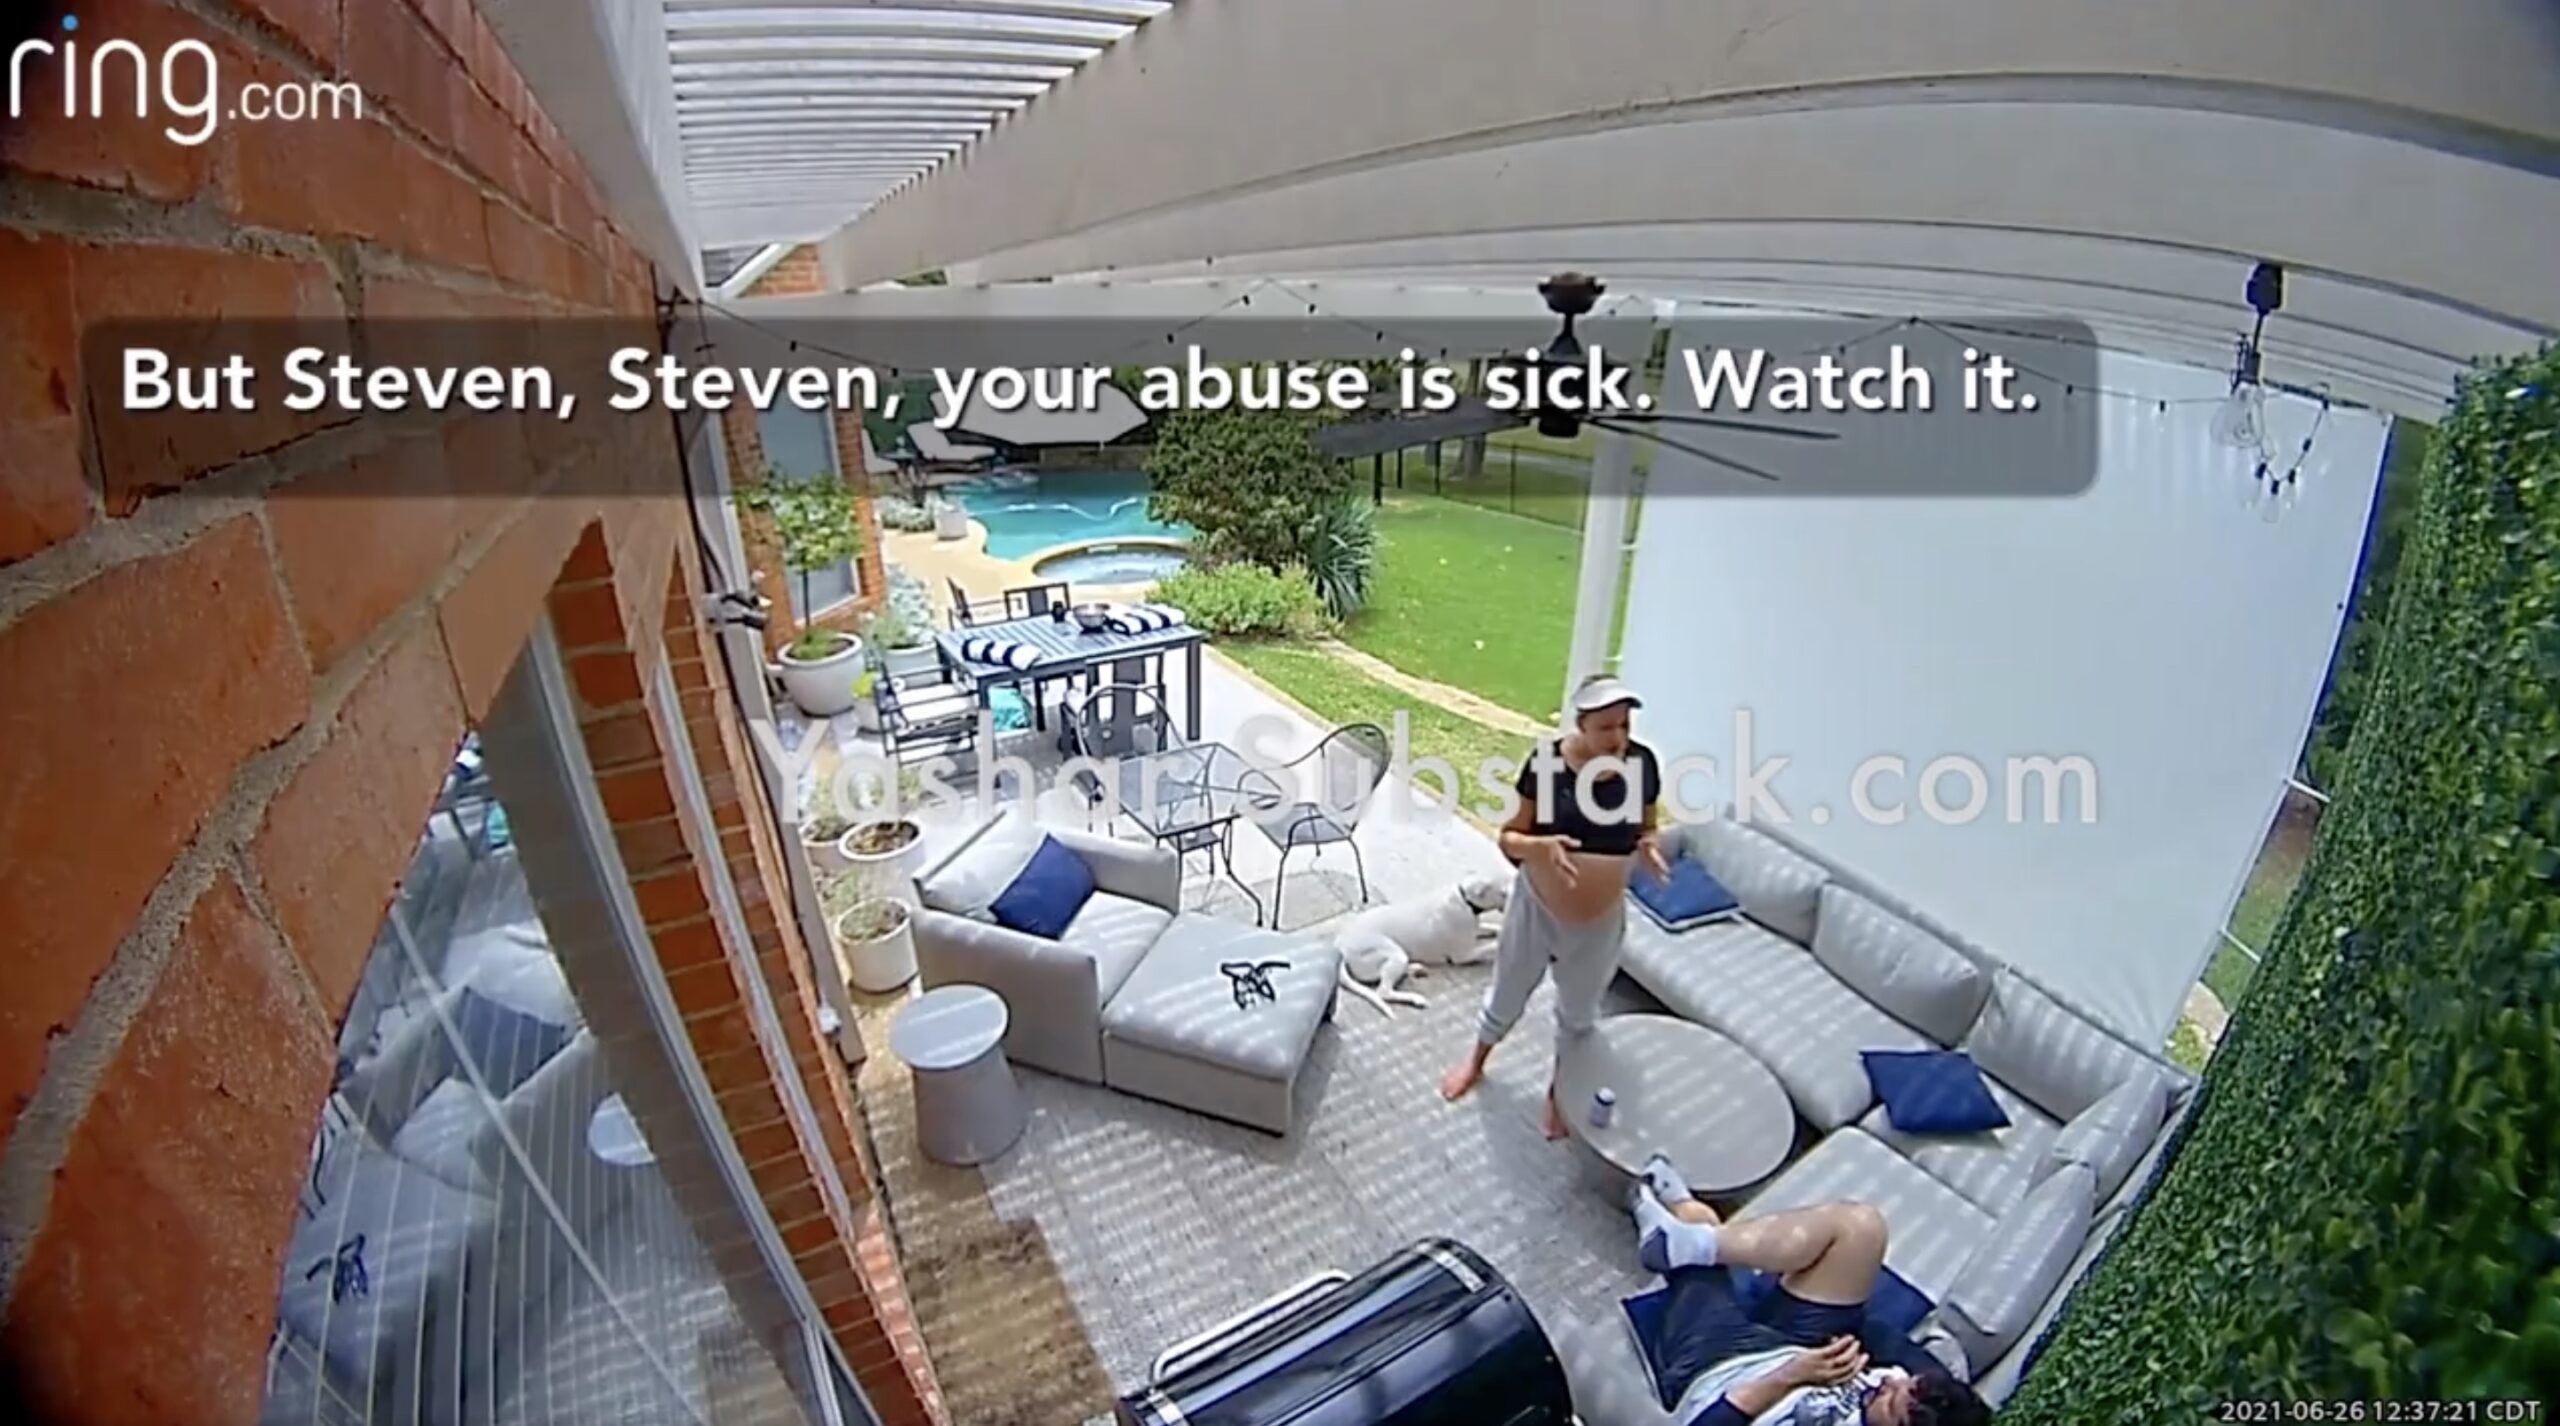 ‘Abusive, Ego-Centric Maniac’: Conservatives Condemn Conservative Influencer Steven Crowder Over Shocking Video (mediaite.com)